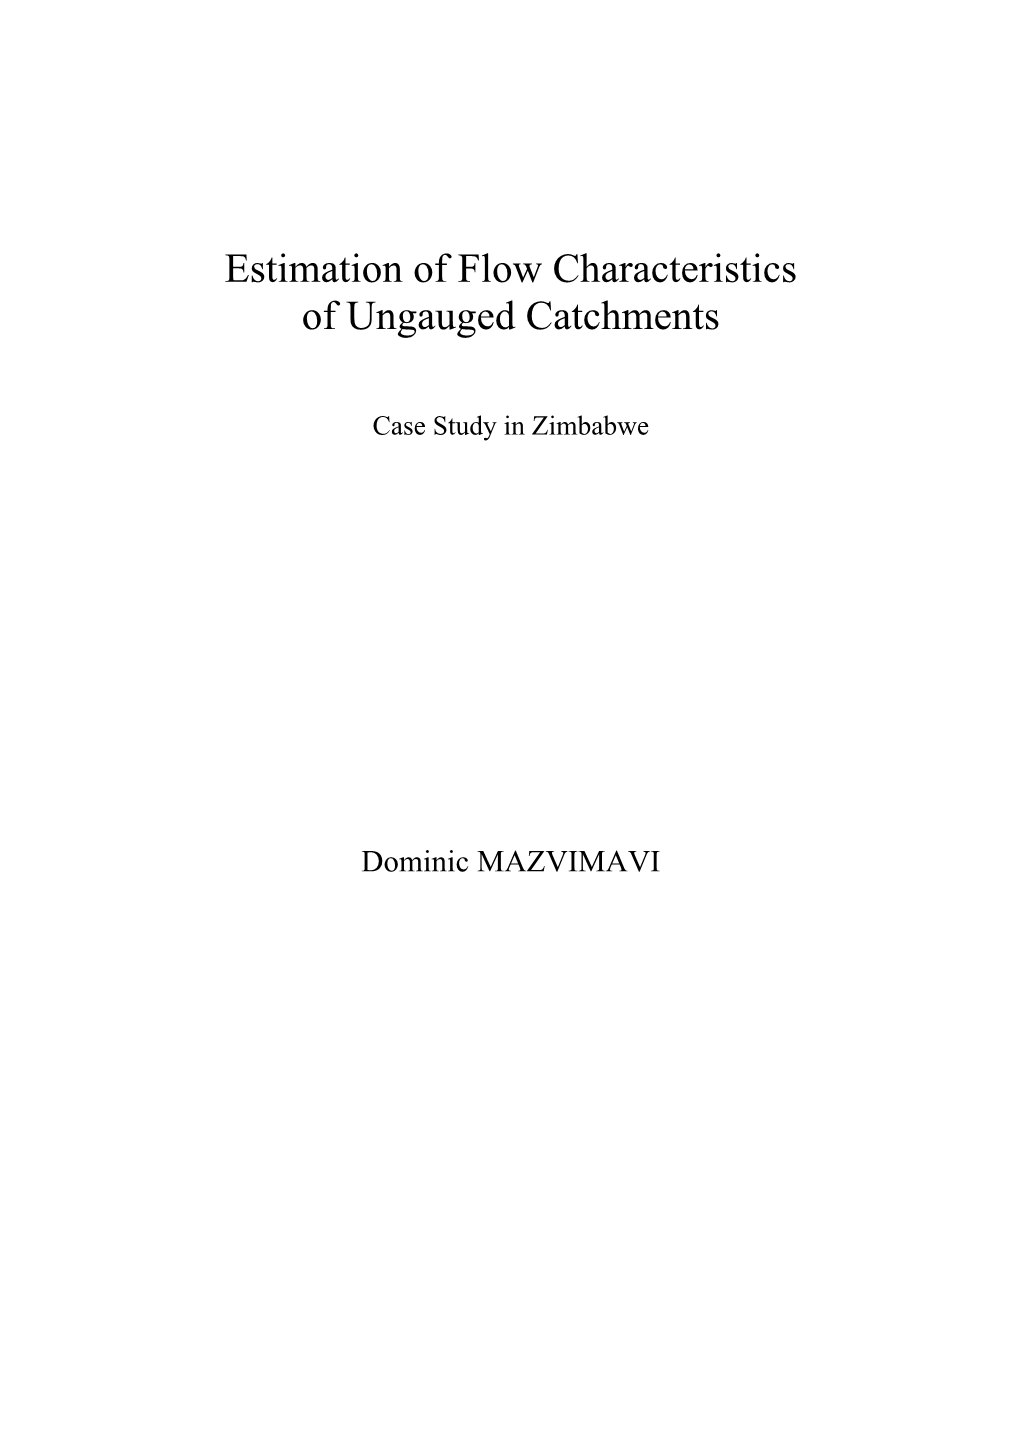 Estimation of Flow Characteristics of Ungauged Catchments